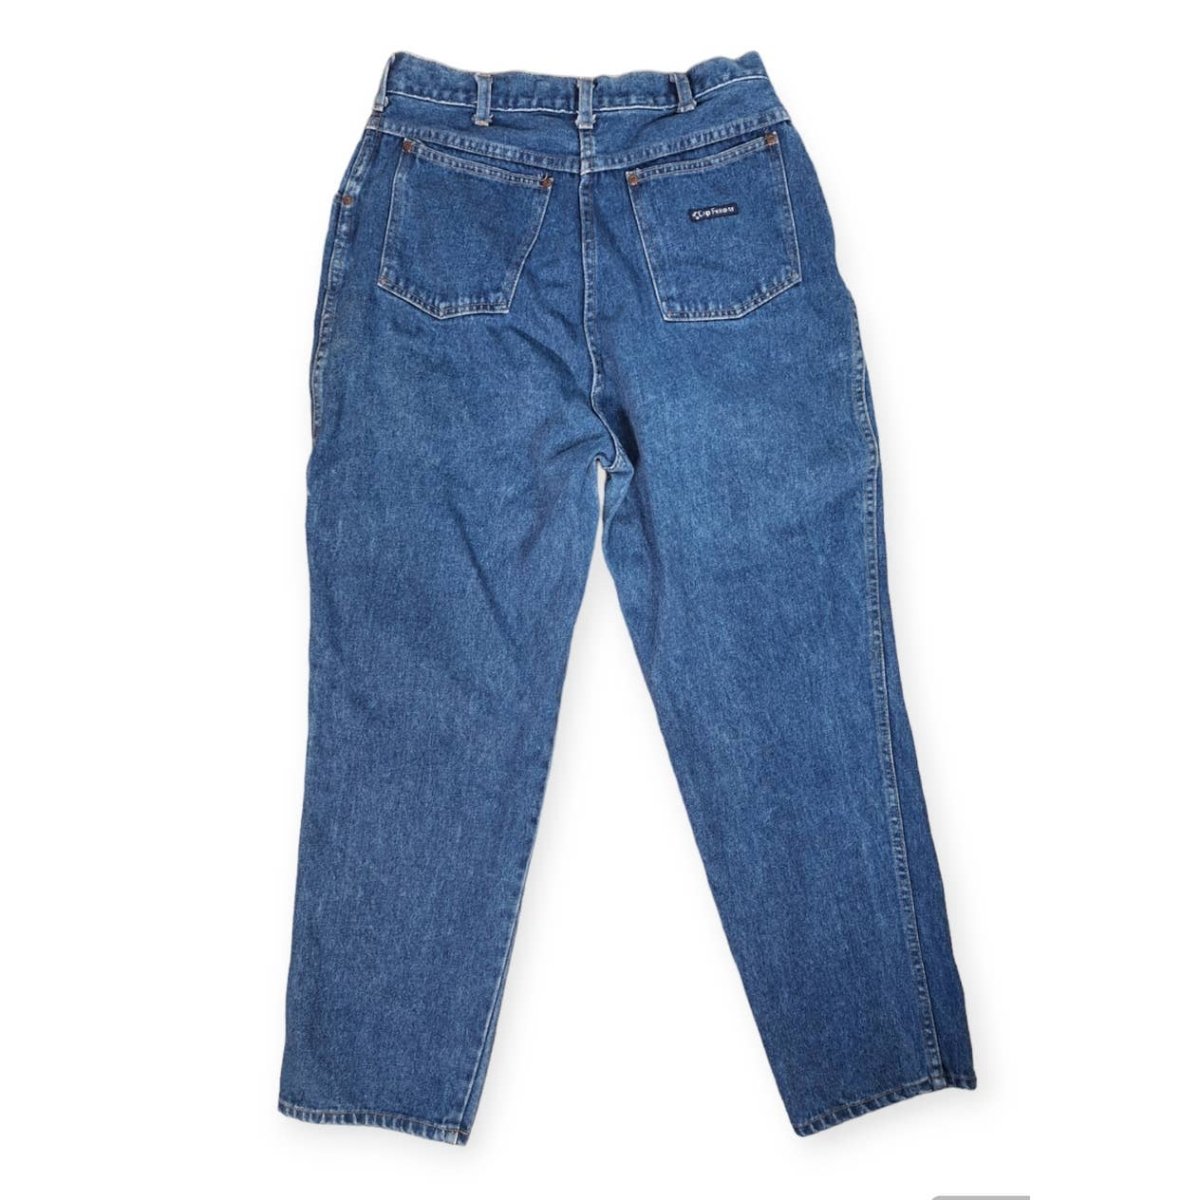 Vintage 80s/90s Cap Ferrat Rhinestone Stud Jeans Size Waist 32 - themallvintage The Mall Vintage